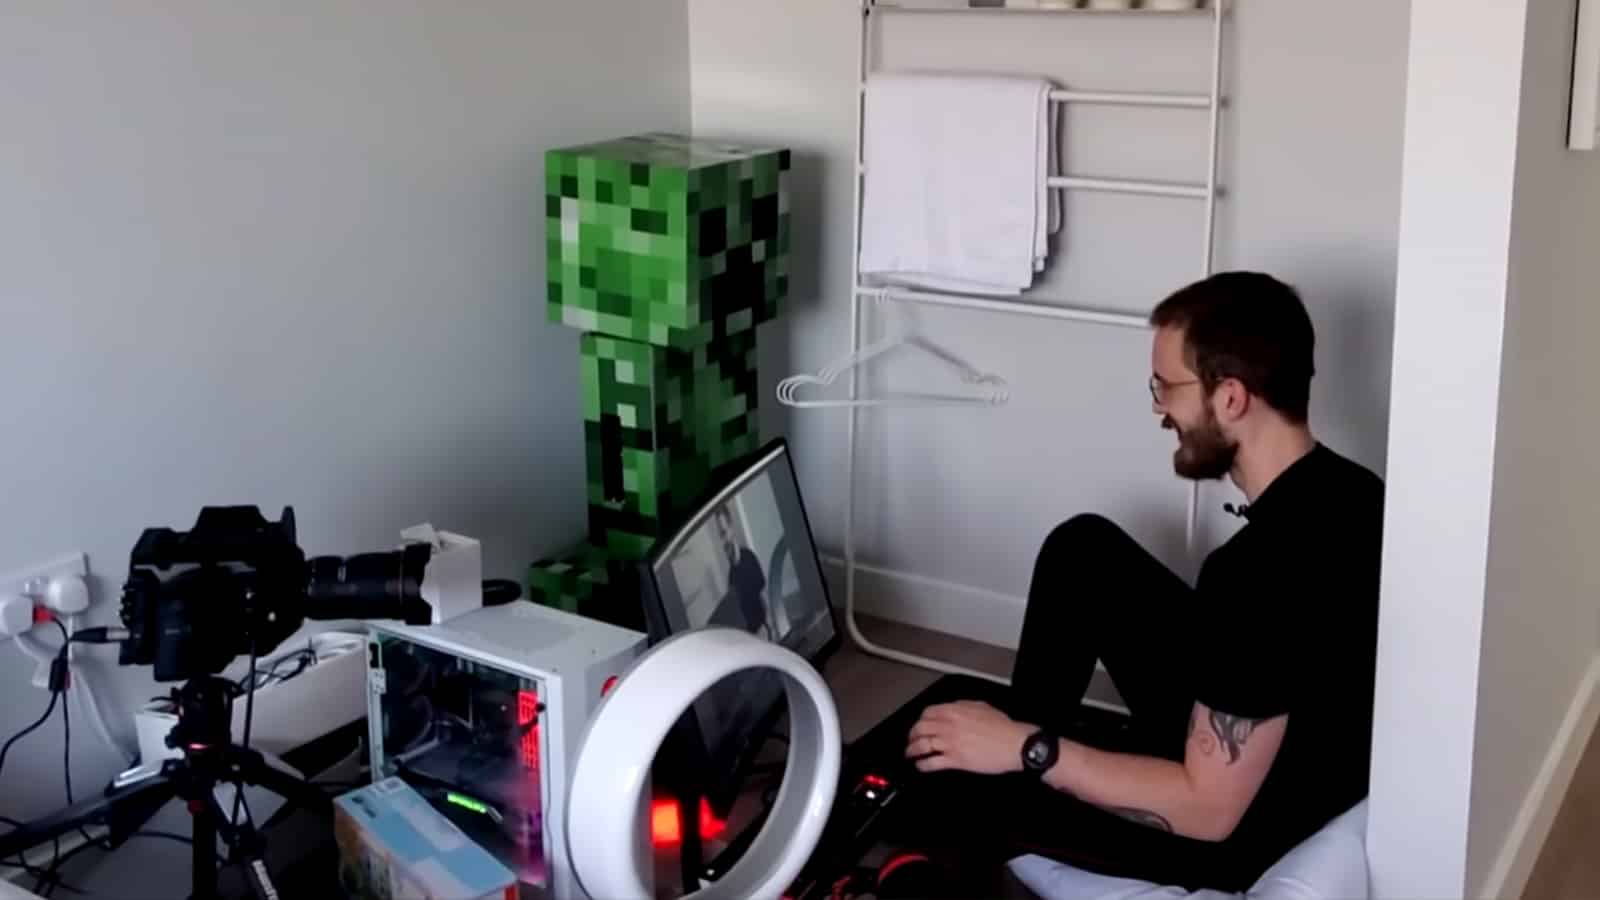 YouTuber PewDiePie sits next to his Minecraft PC screenshot.